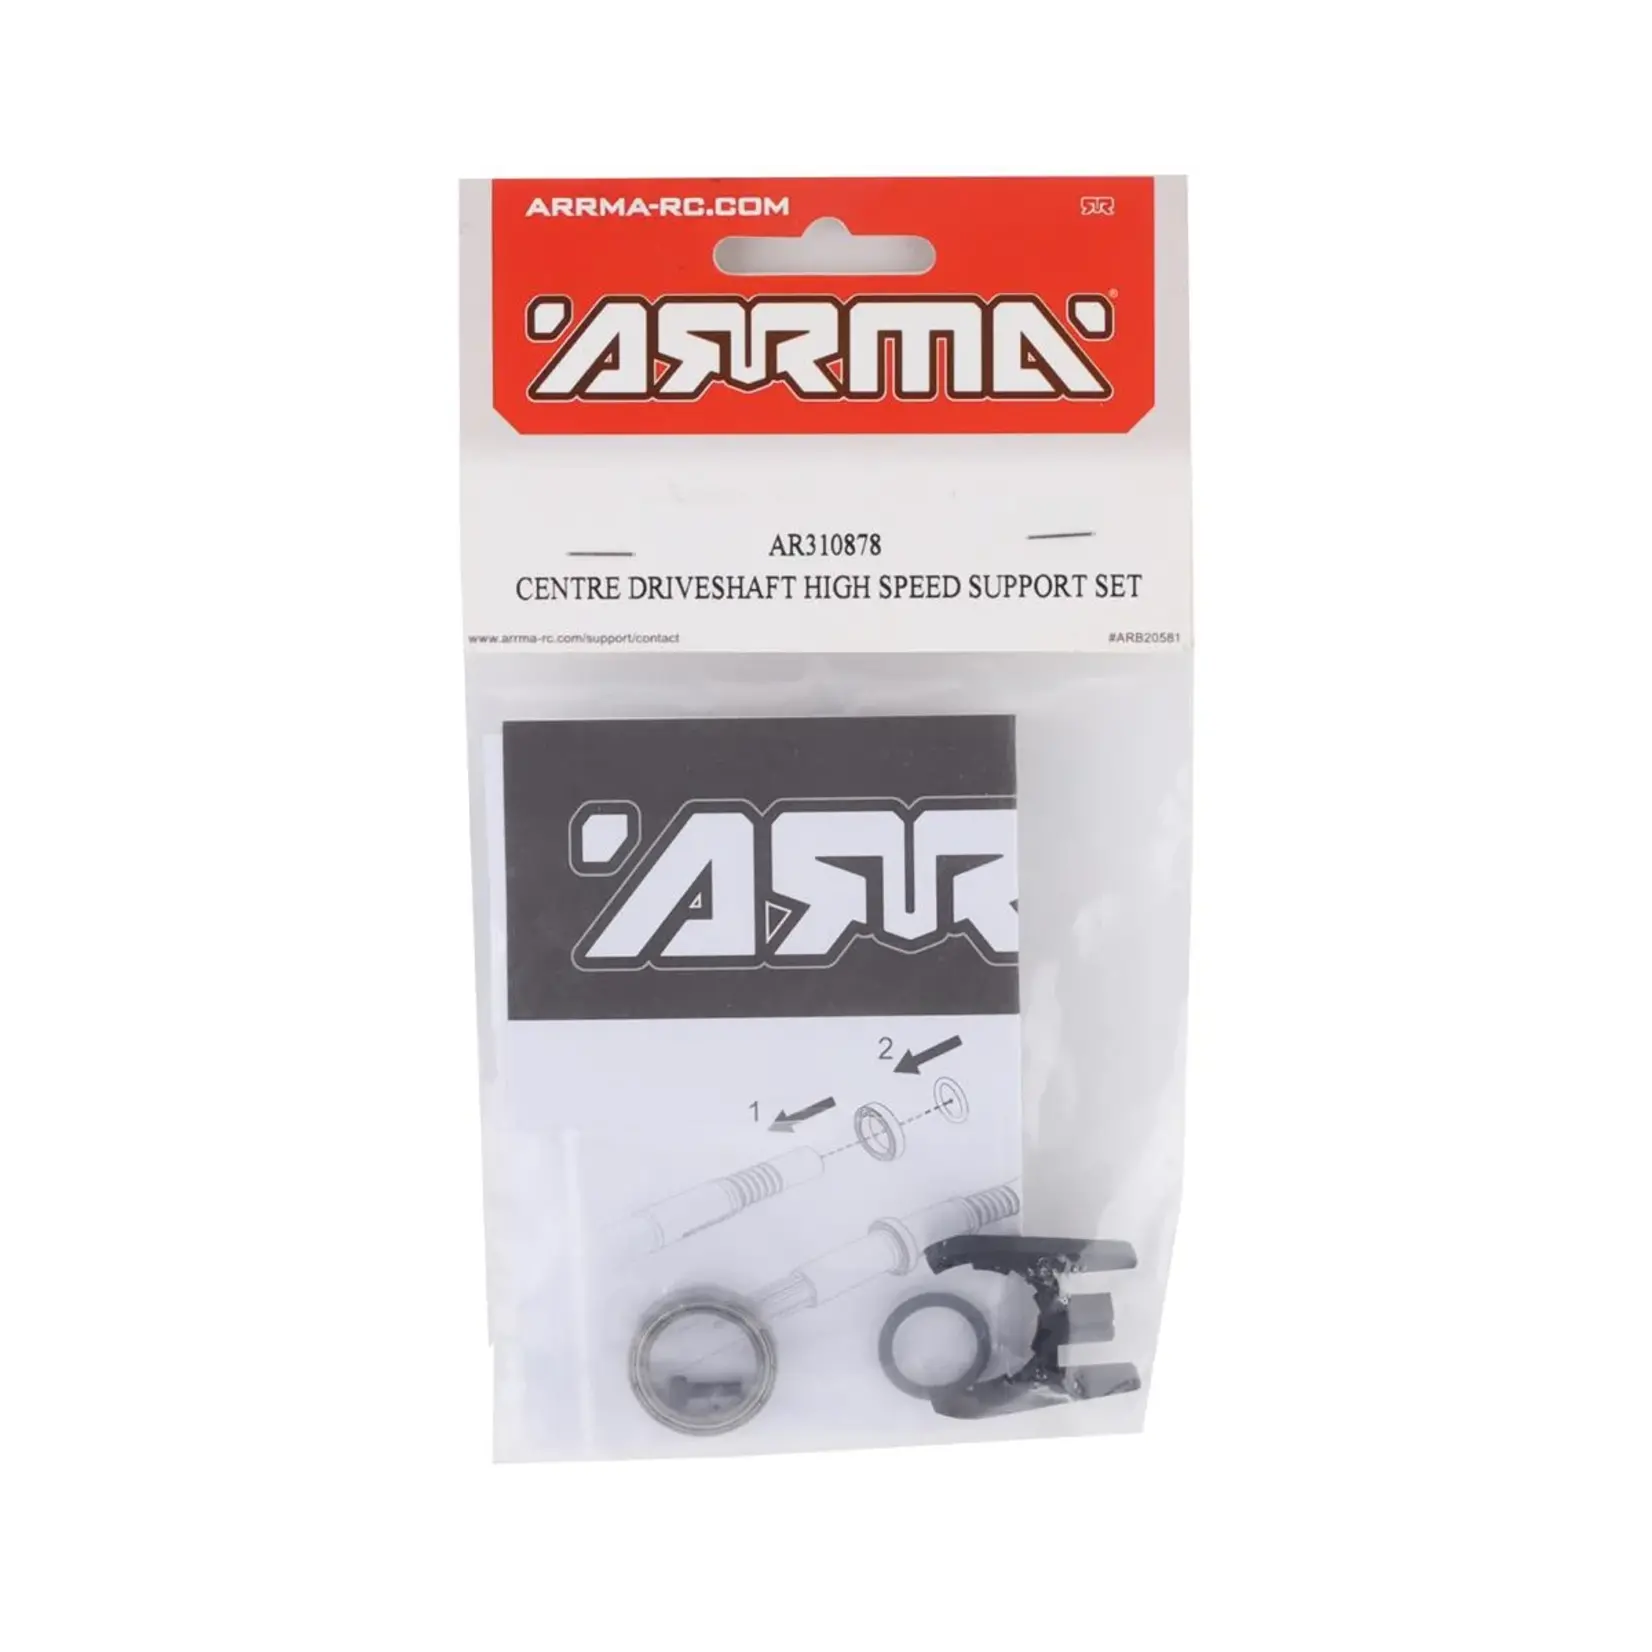 ARRMA Arrma 4x4 Center Driveshaft High Speed Support #AR310878